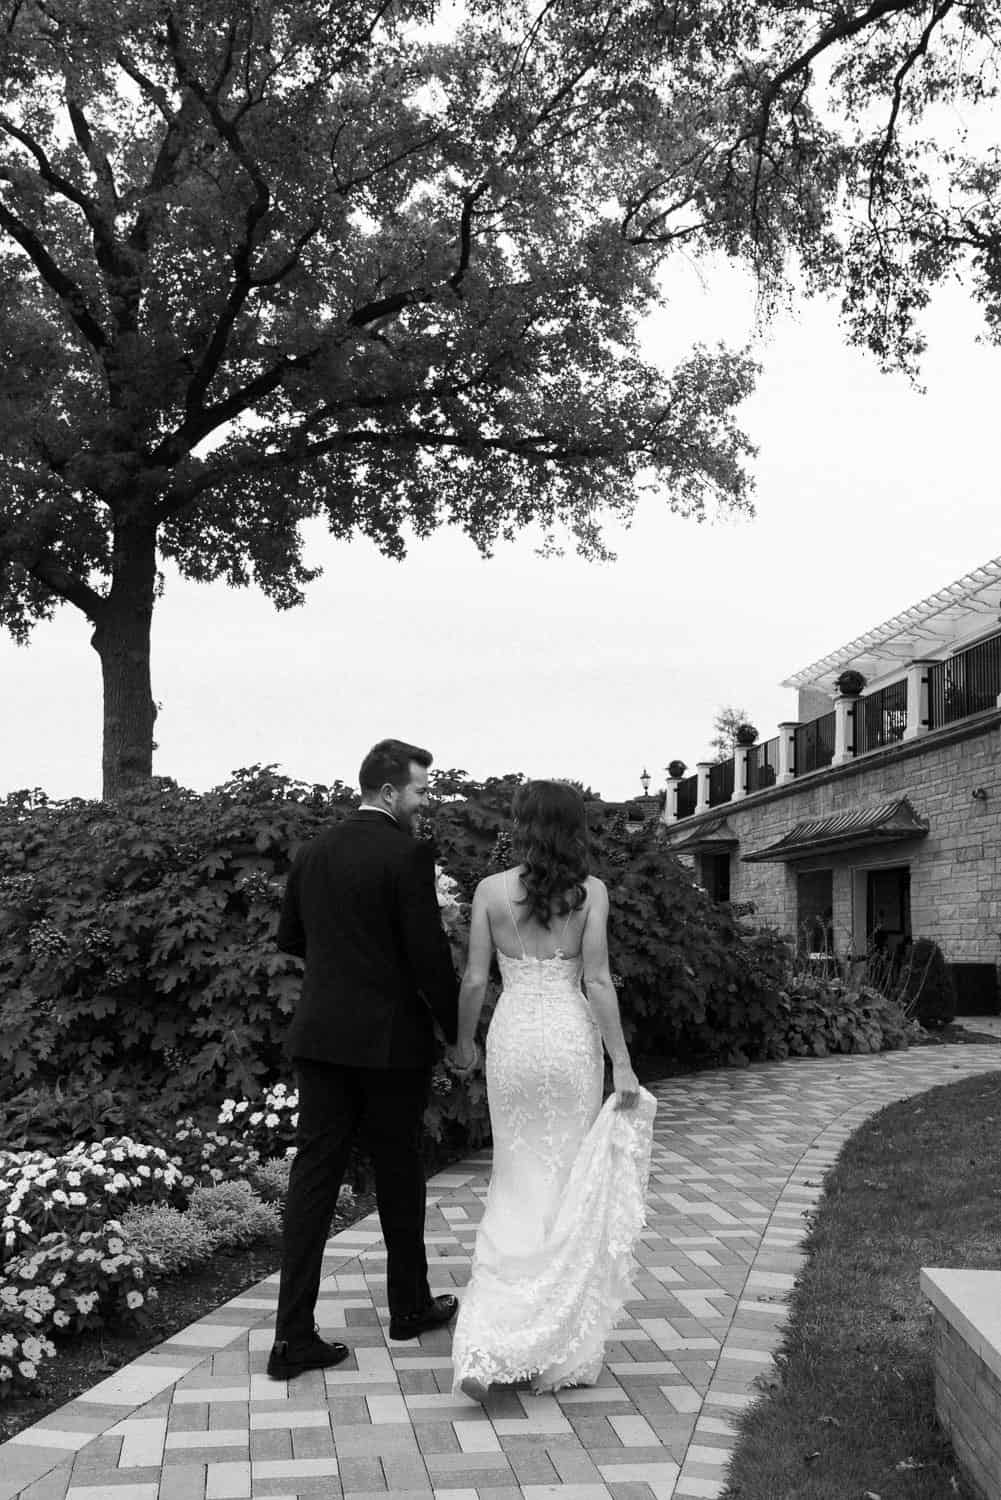 Bellerive Country Wedding, St. Louis Wedding Venue, St. Louis Wedding Photographer, Theresa Kelly Photography